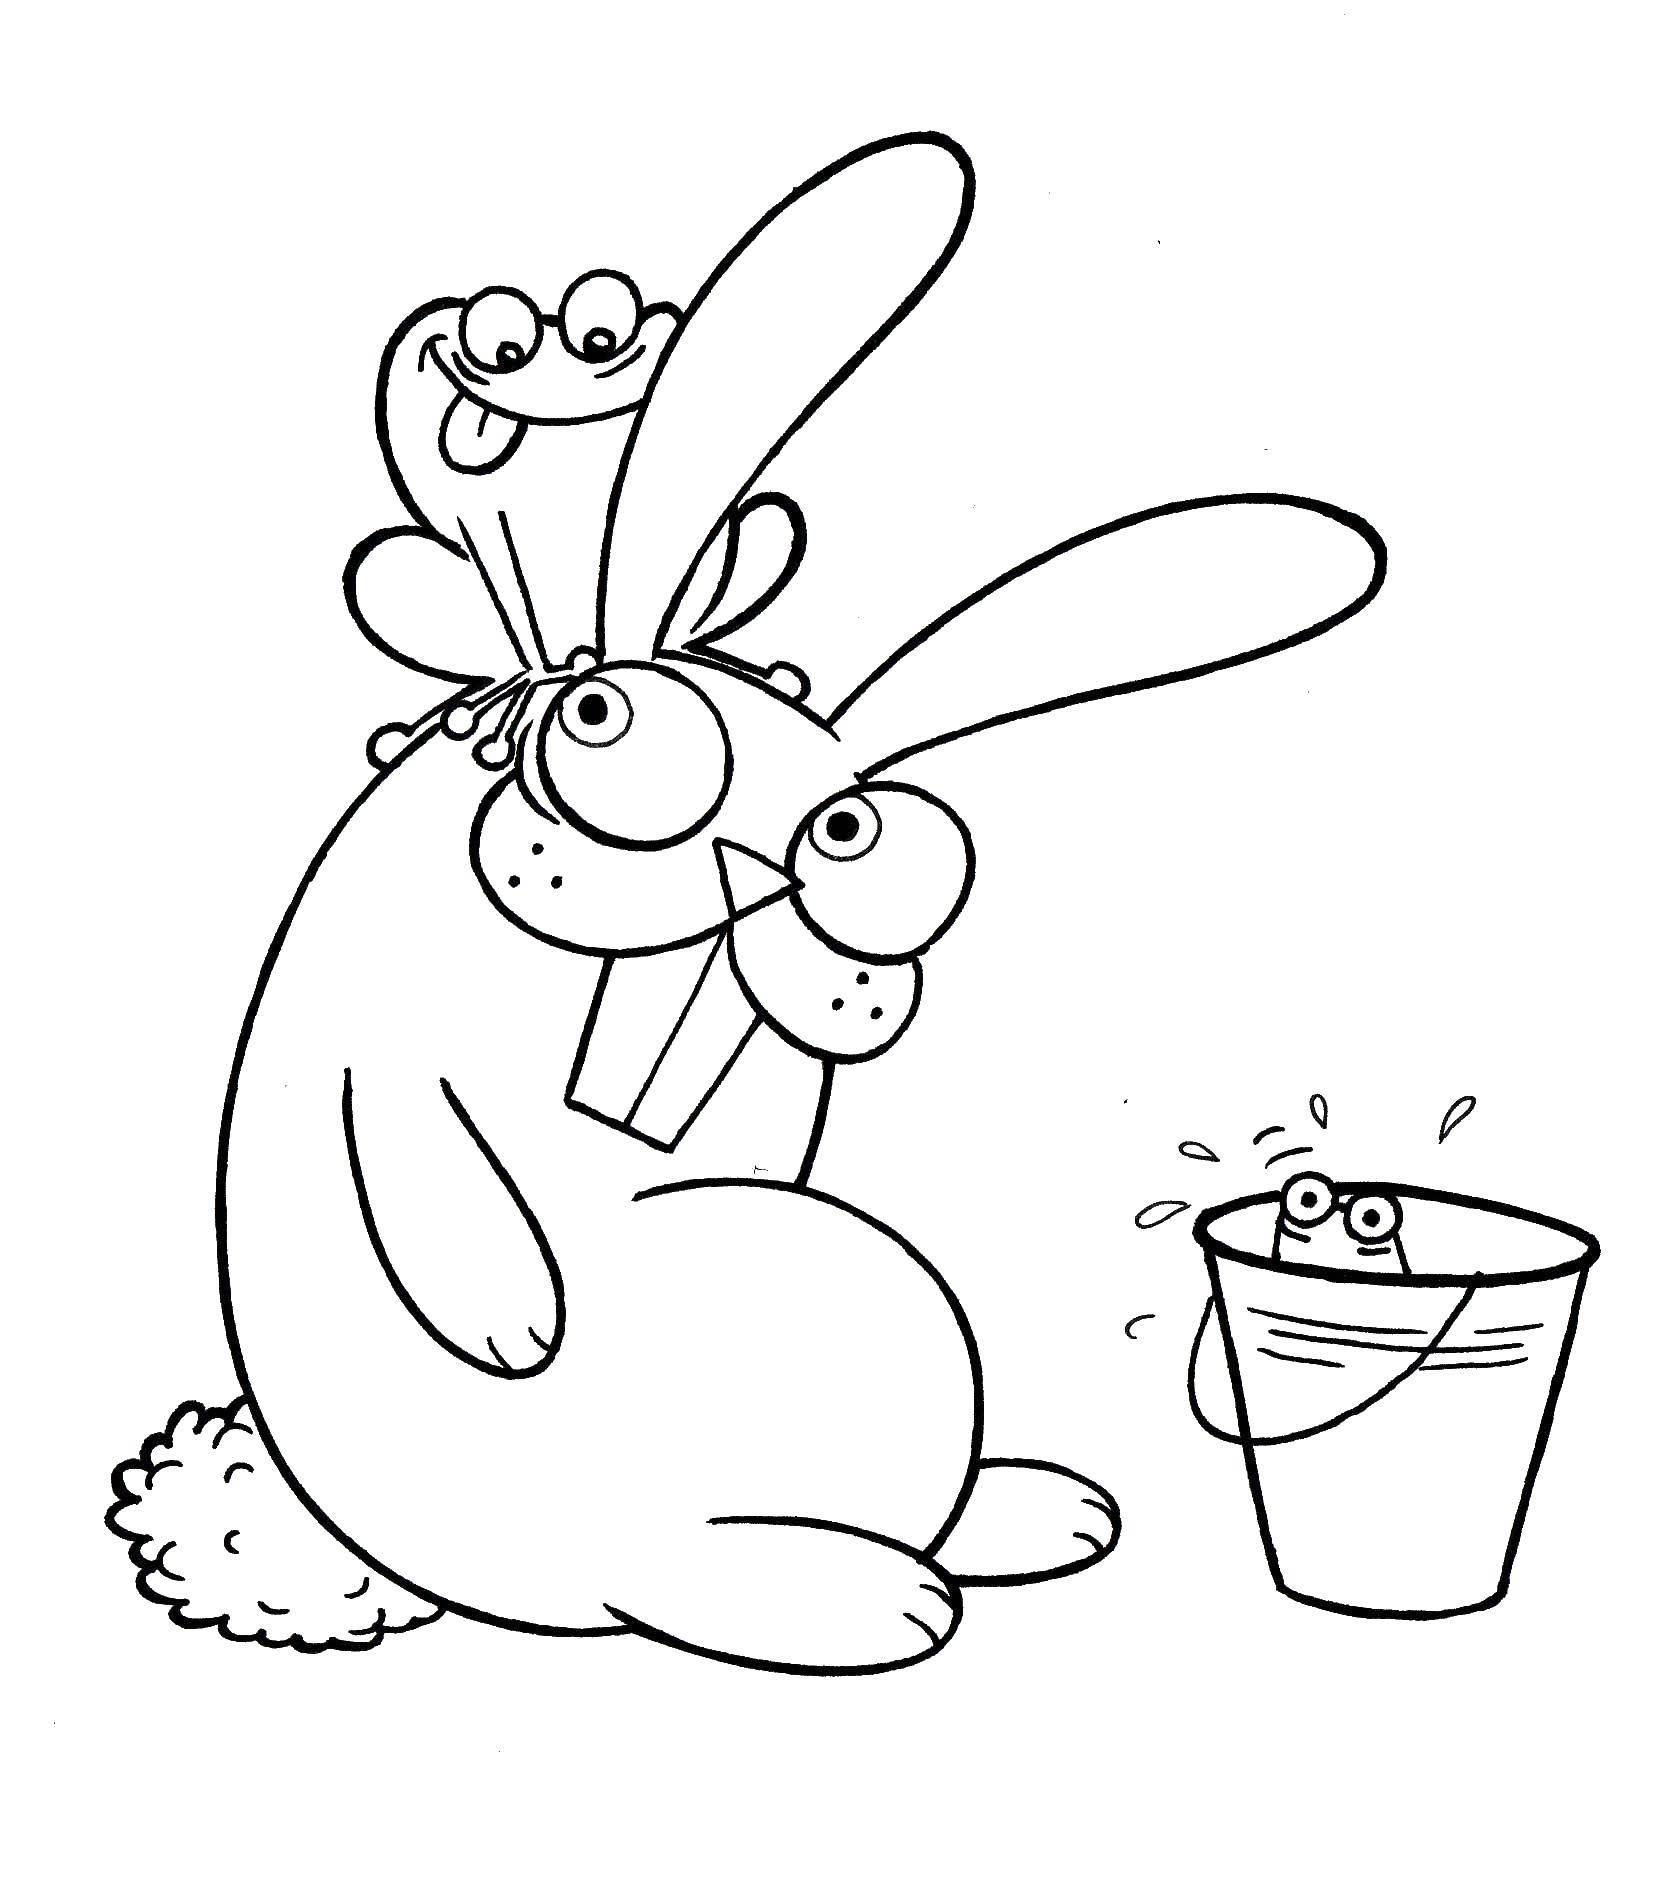 Coloring Bunny bucket. Category the rabbit. Tags:  rabbit, bucket.